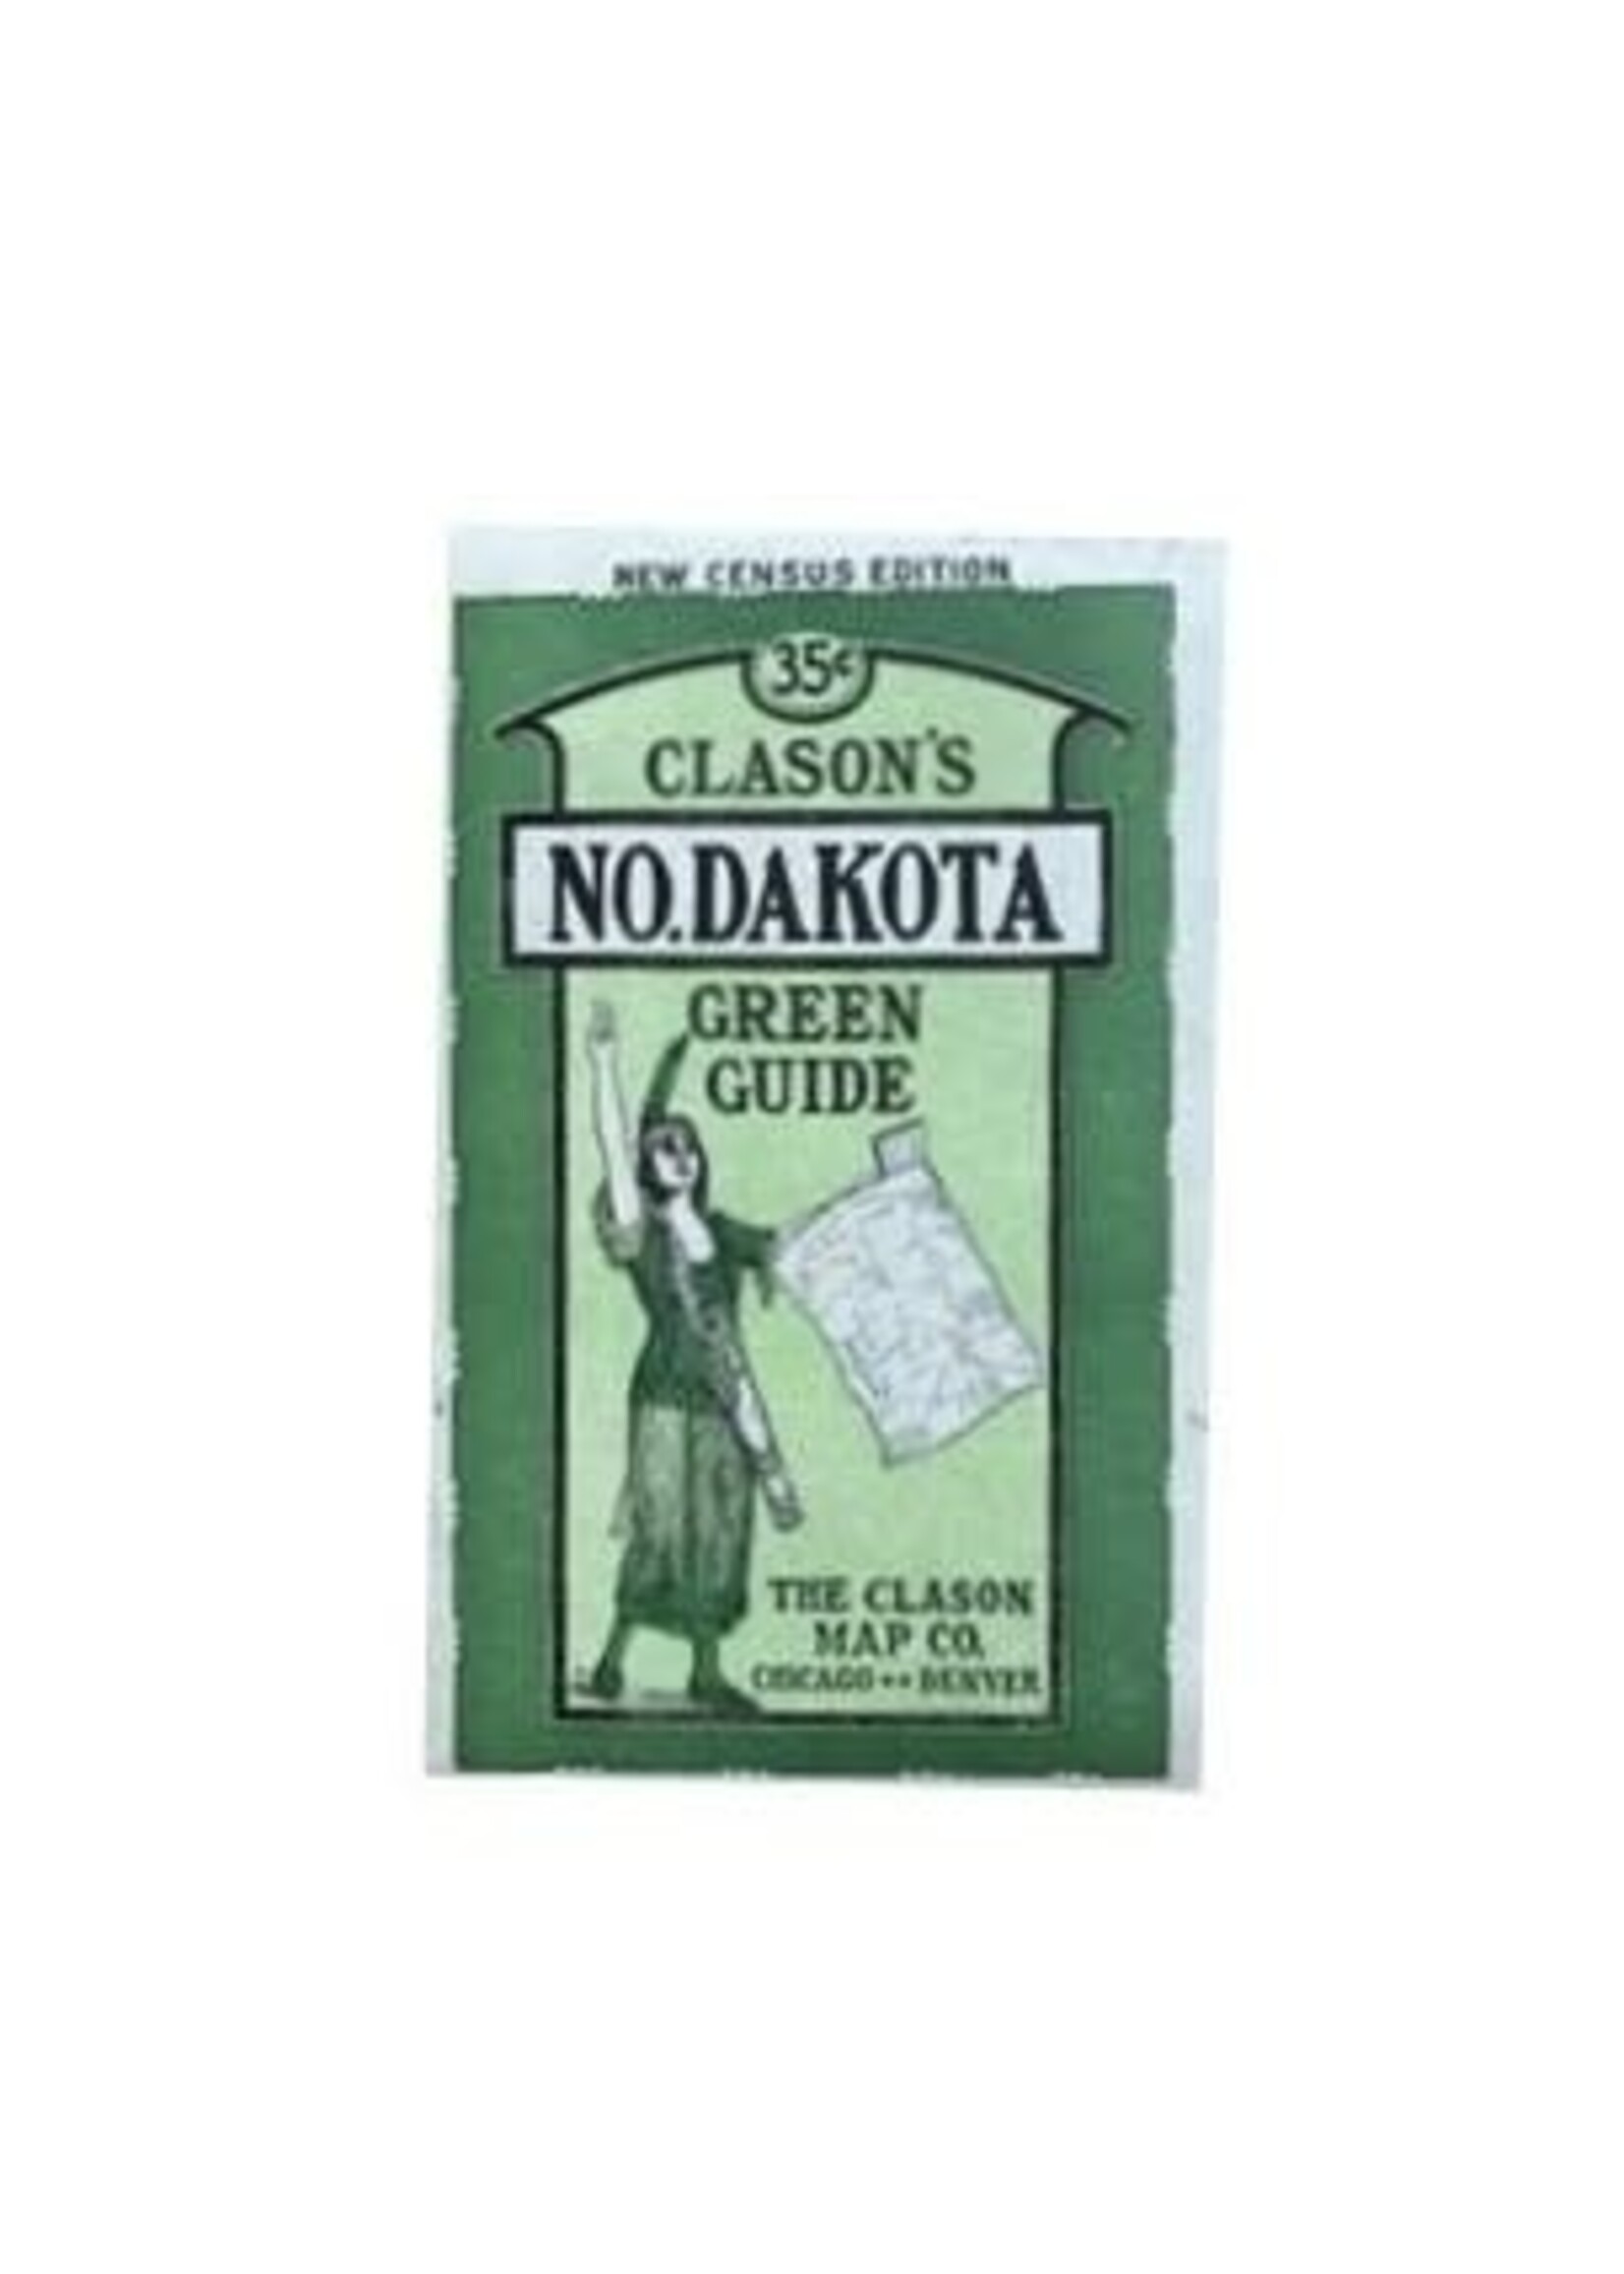 Clason's No. Dakota Green Guide